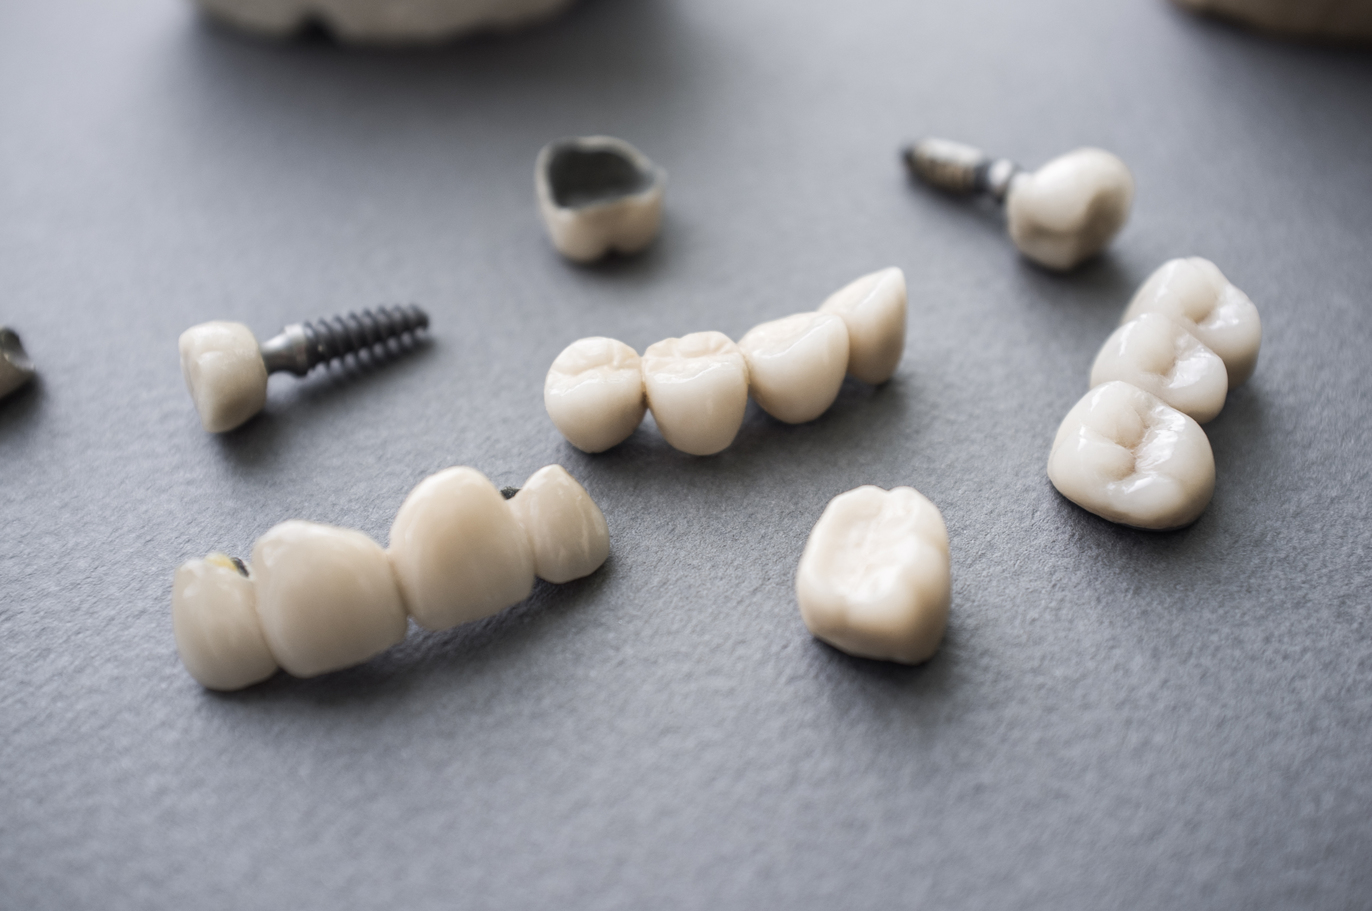 dental implants on a table